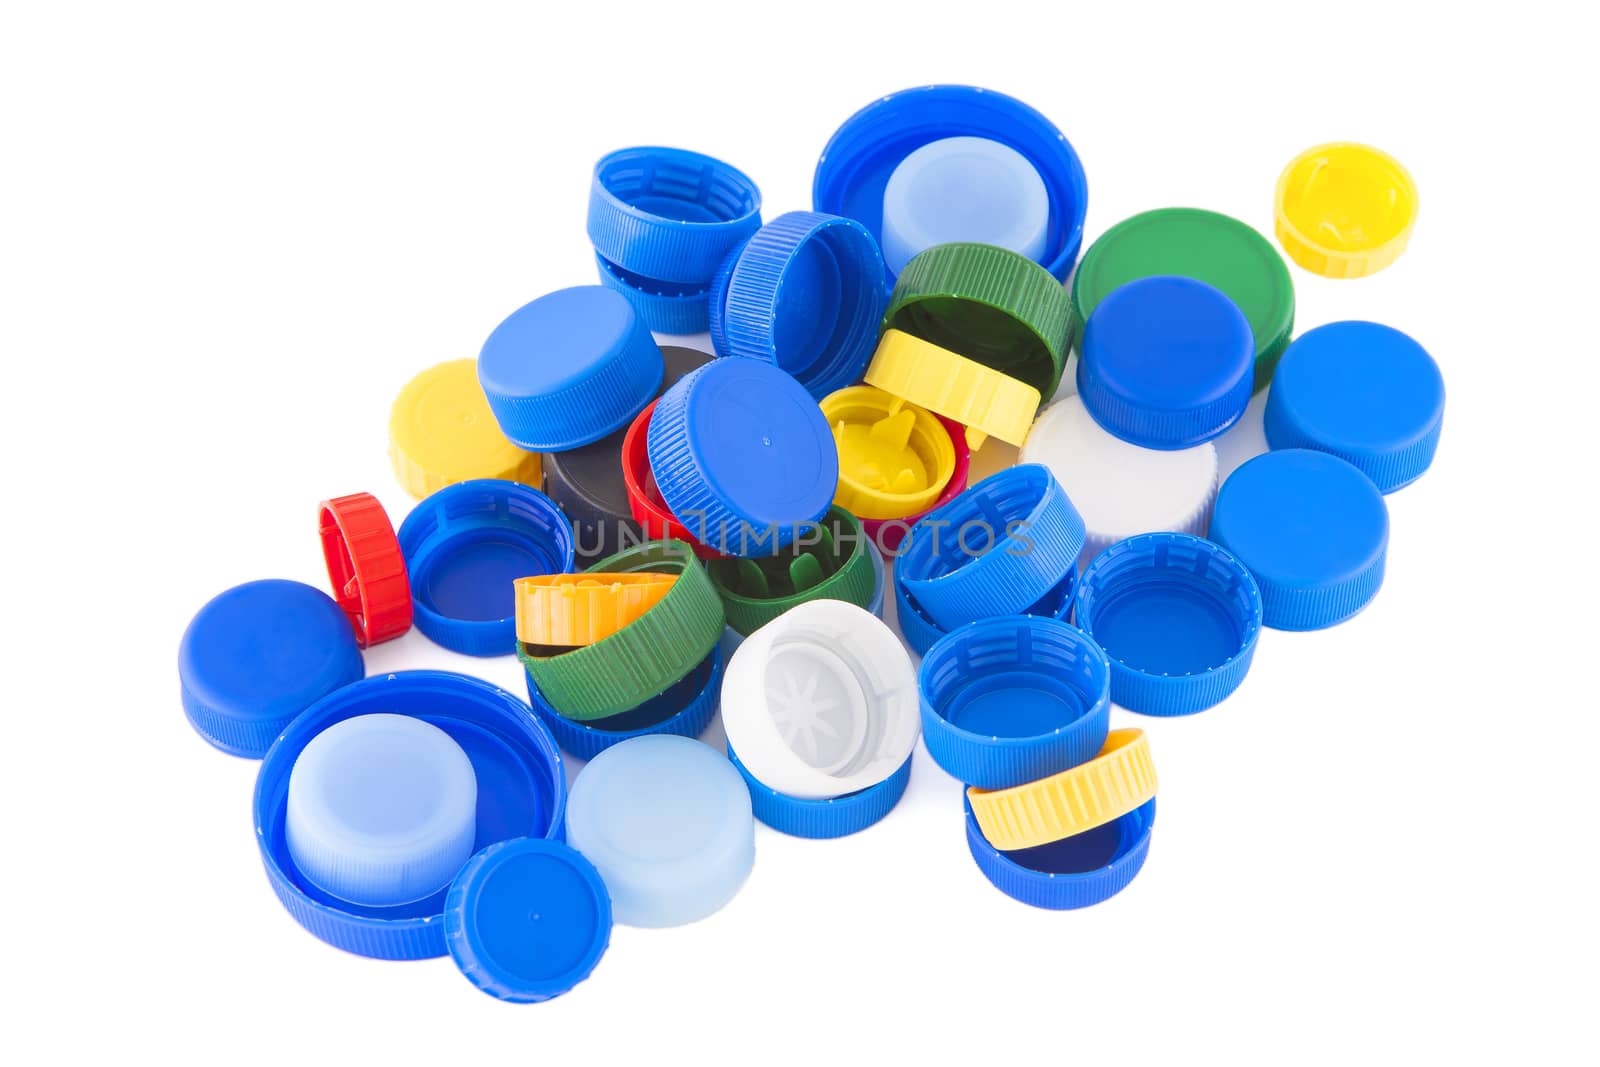 Plastic bottle caps isolated by Gbuglok